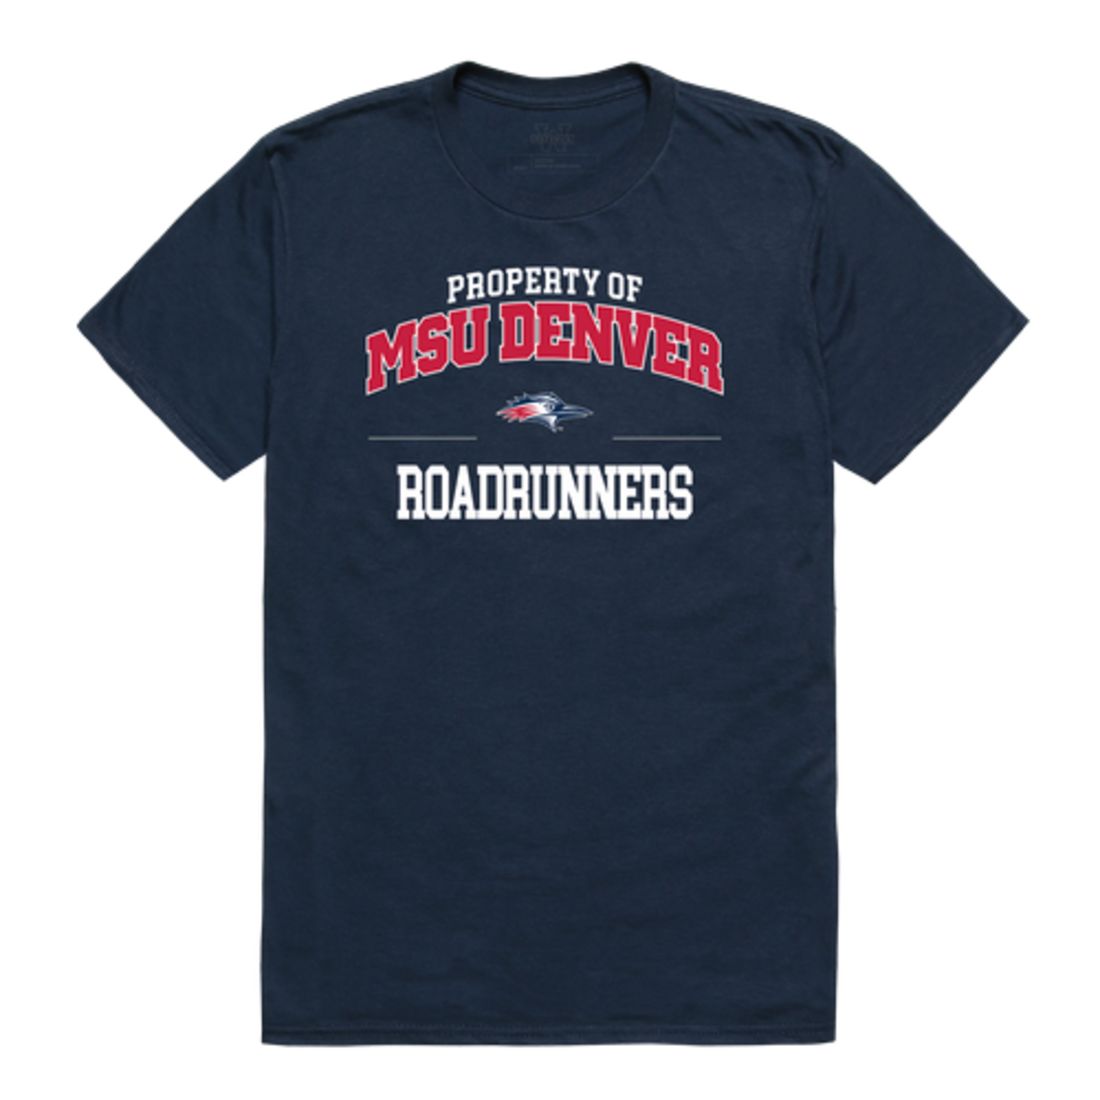 Metropolitan State University of Denver Roadrunners Property T-Shirt Tee